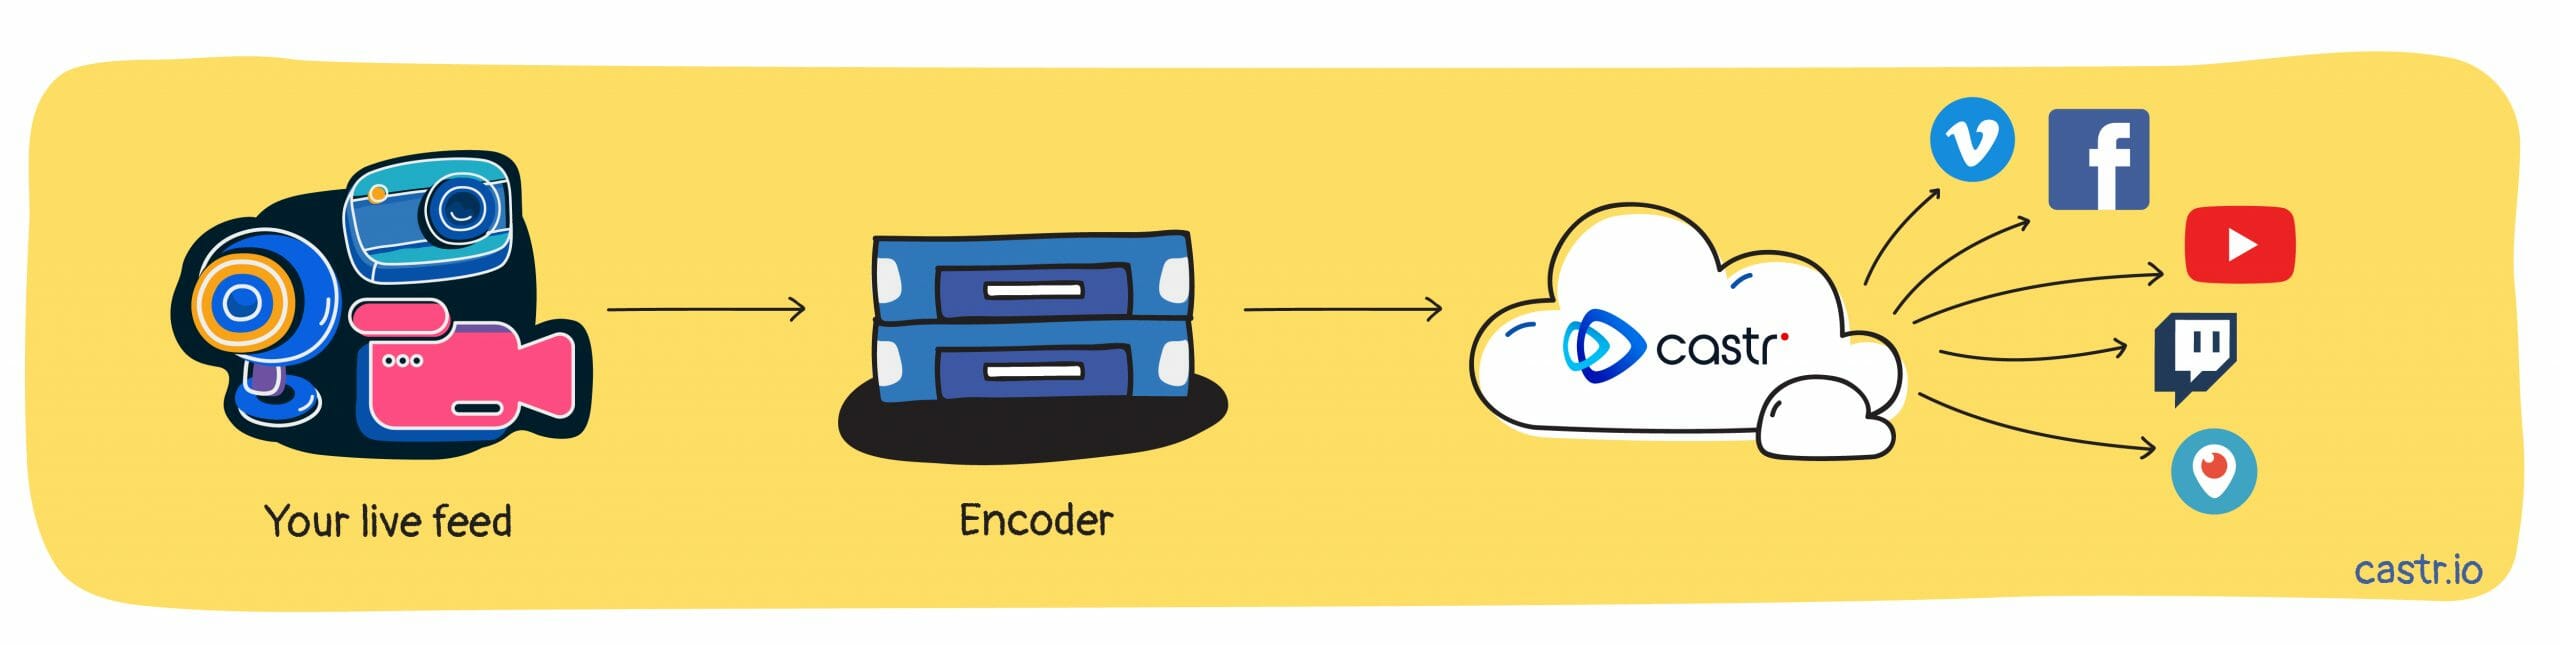 multistreaming-cloud-service-castr